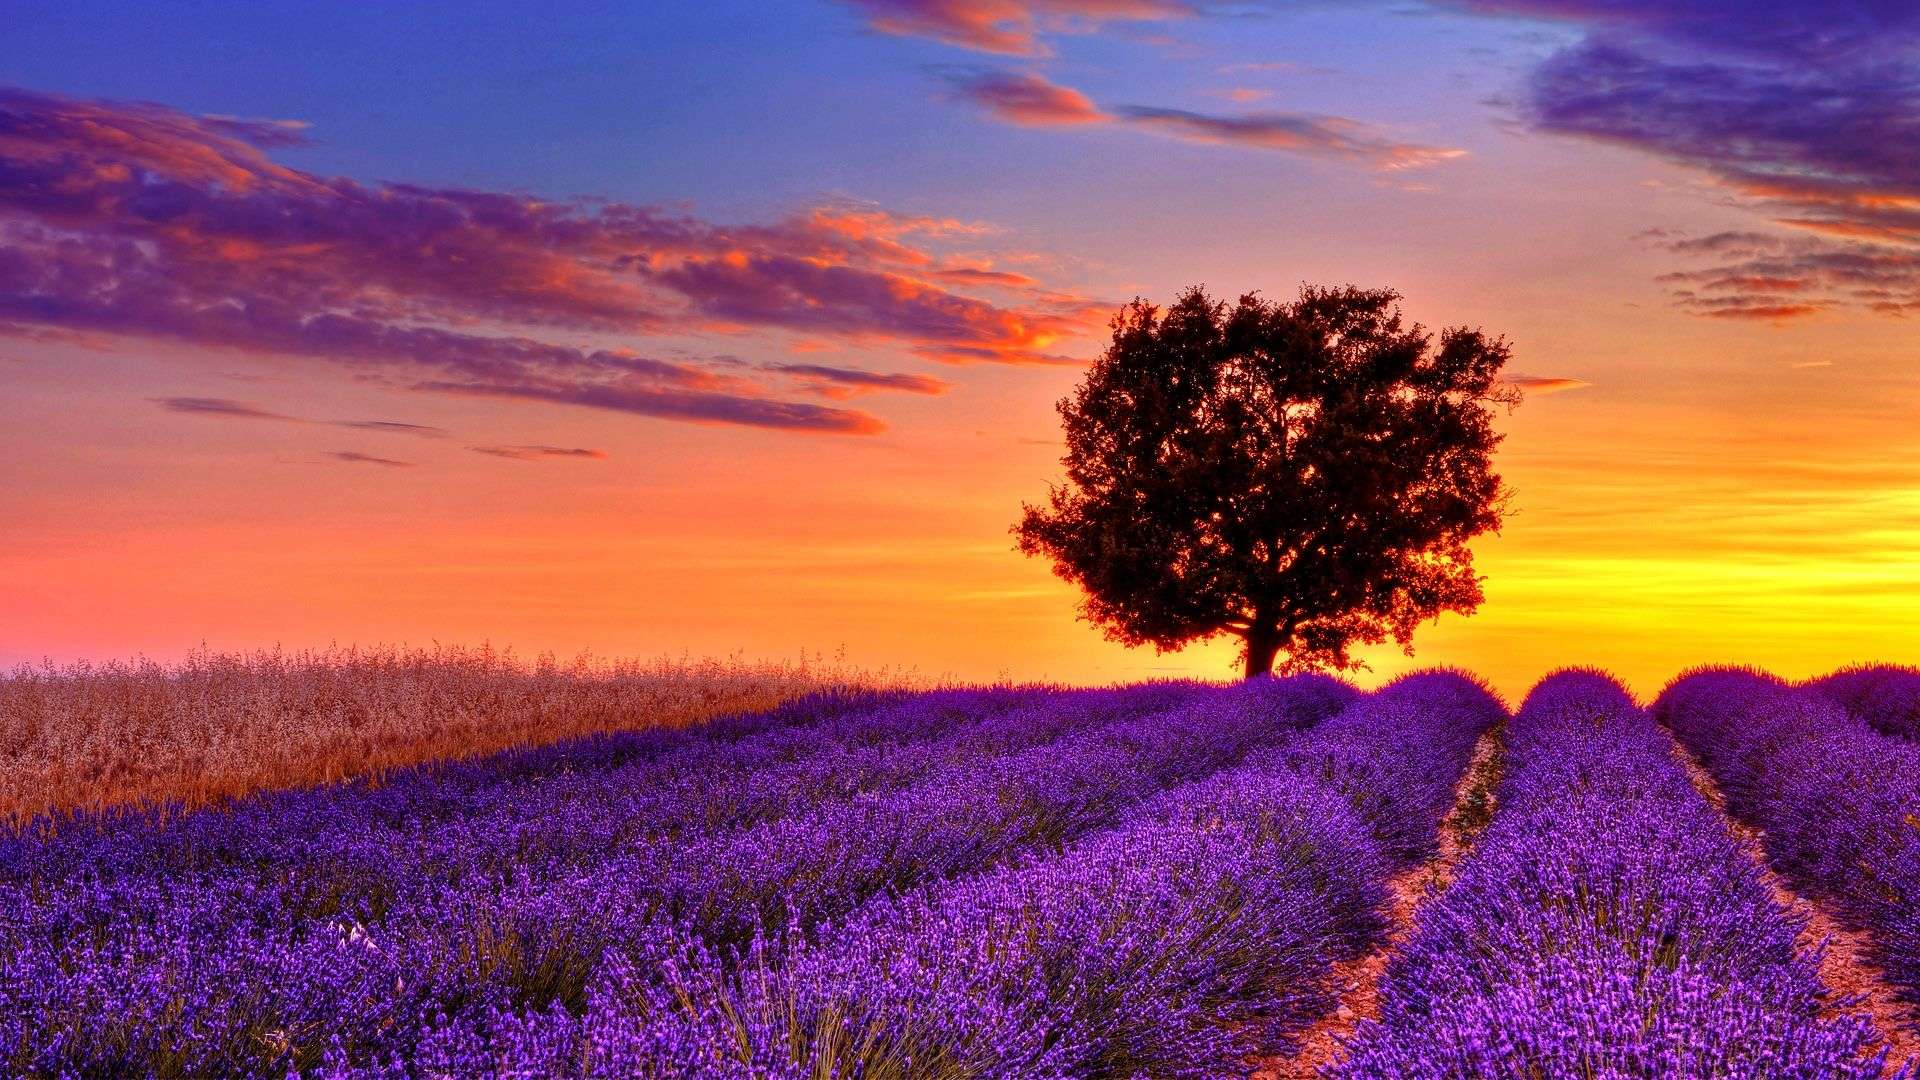 lavender-flower-field-sunset-high-resolution-wallpaper-for- desktop-background-download-lavender-images-free - Body Power And Posture